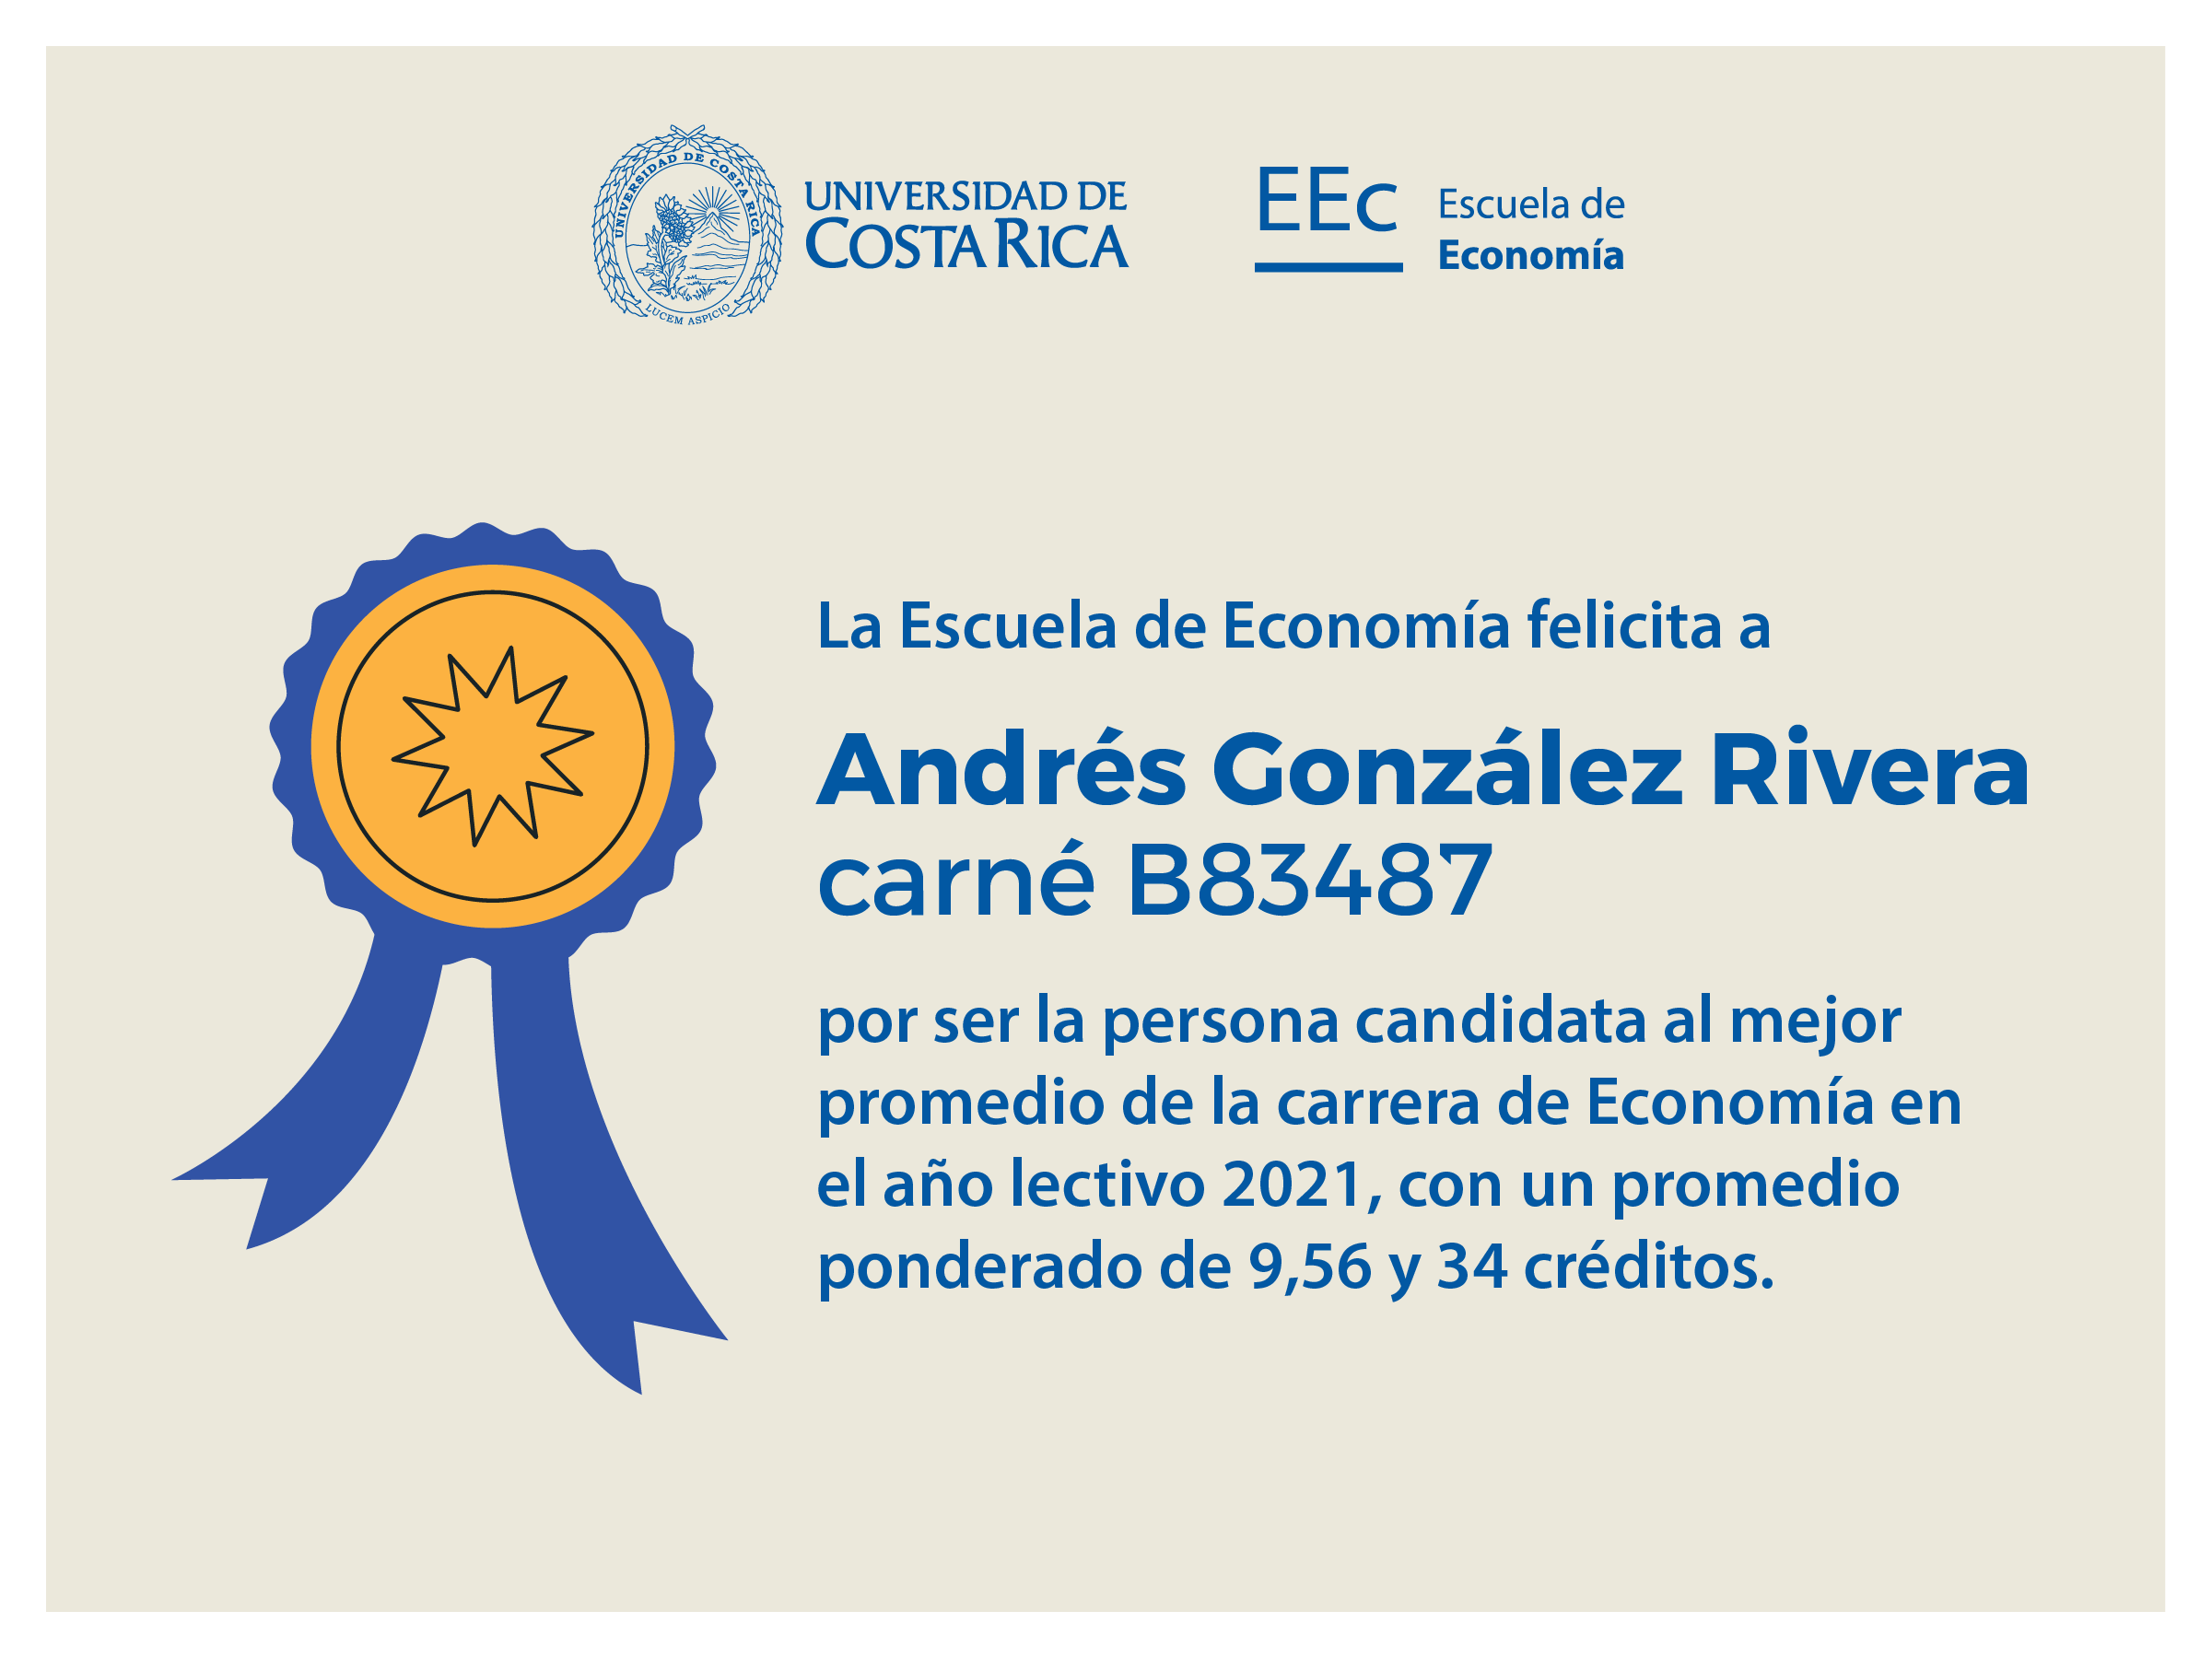 La Escuela de Economía felicita a Andrés González Rivera, carné B83487, por ser la persona candidata al mejor promedio de la car